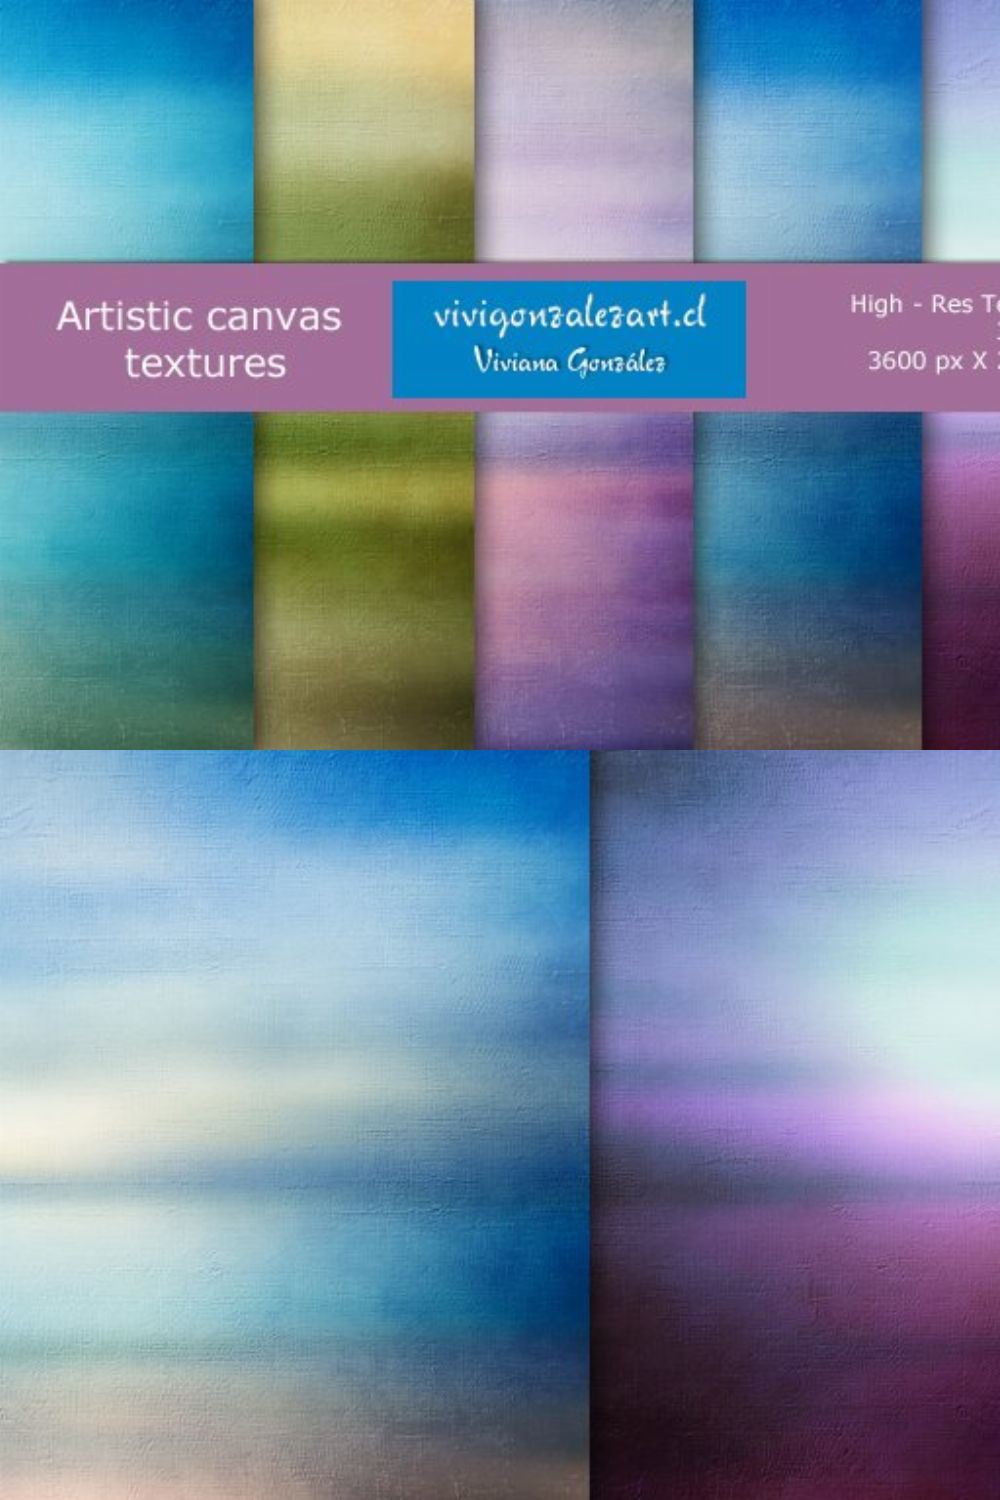 Artistic canvas textures pinterest preview image.